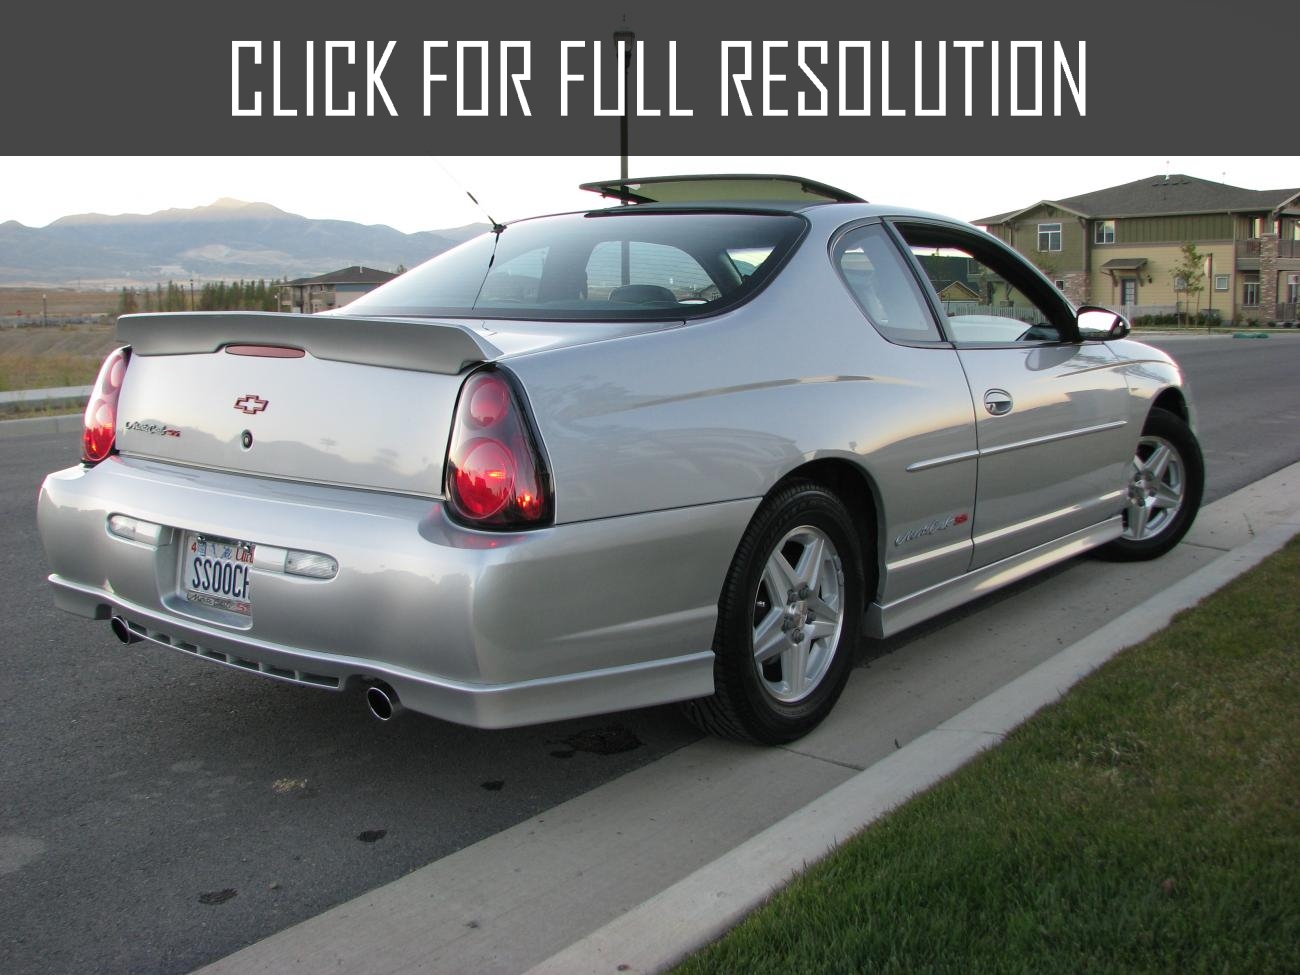 Chevrolet Monte Carlo 2002